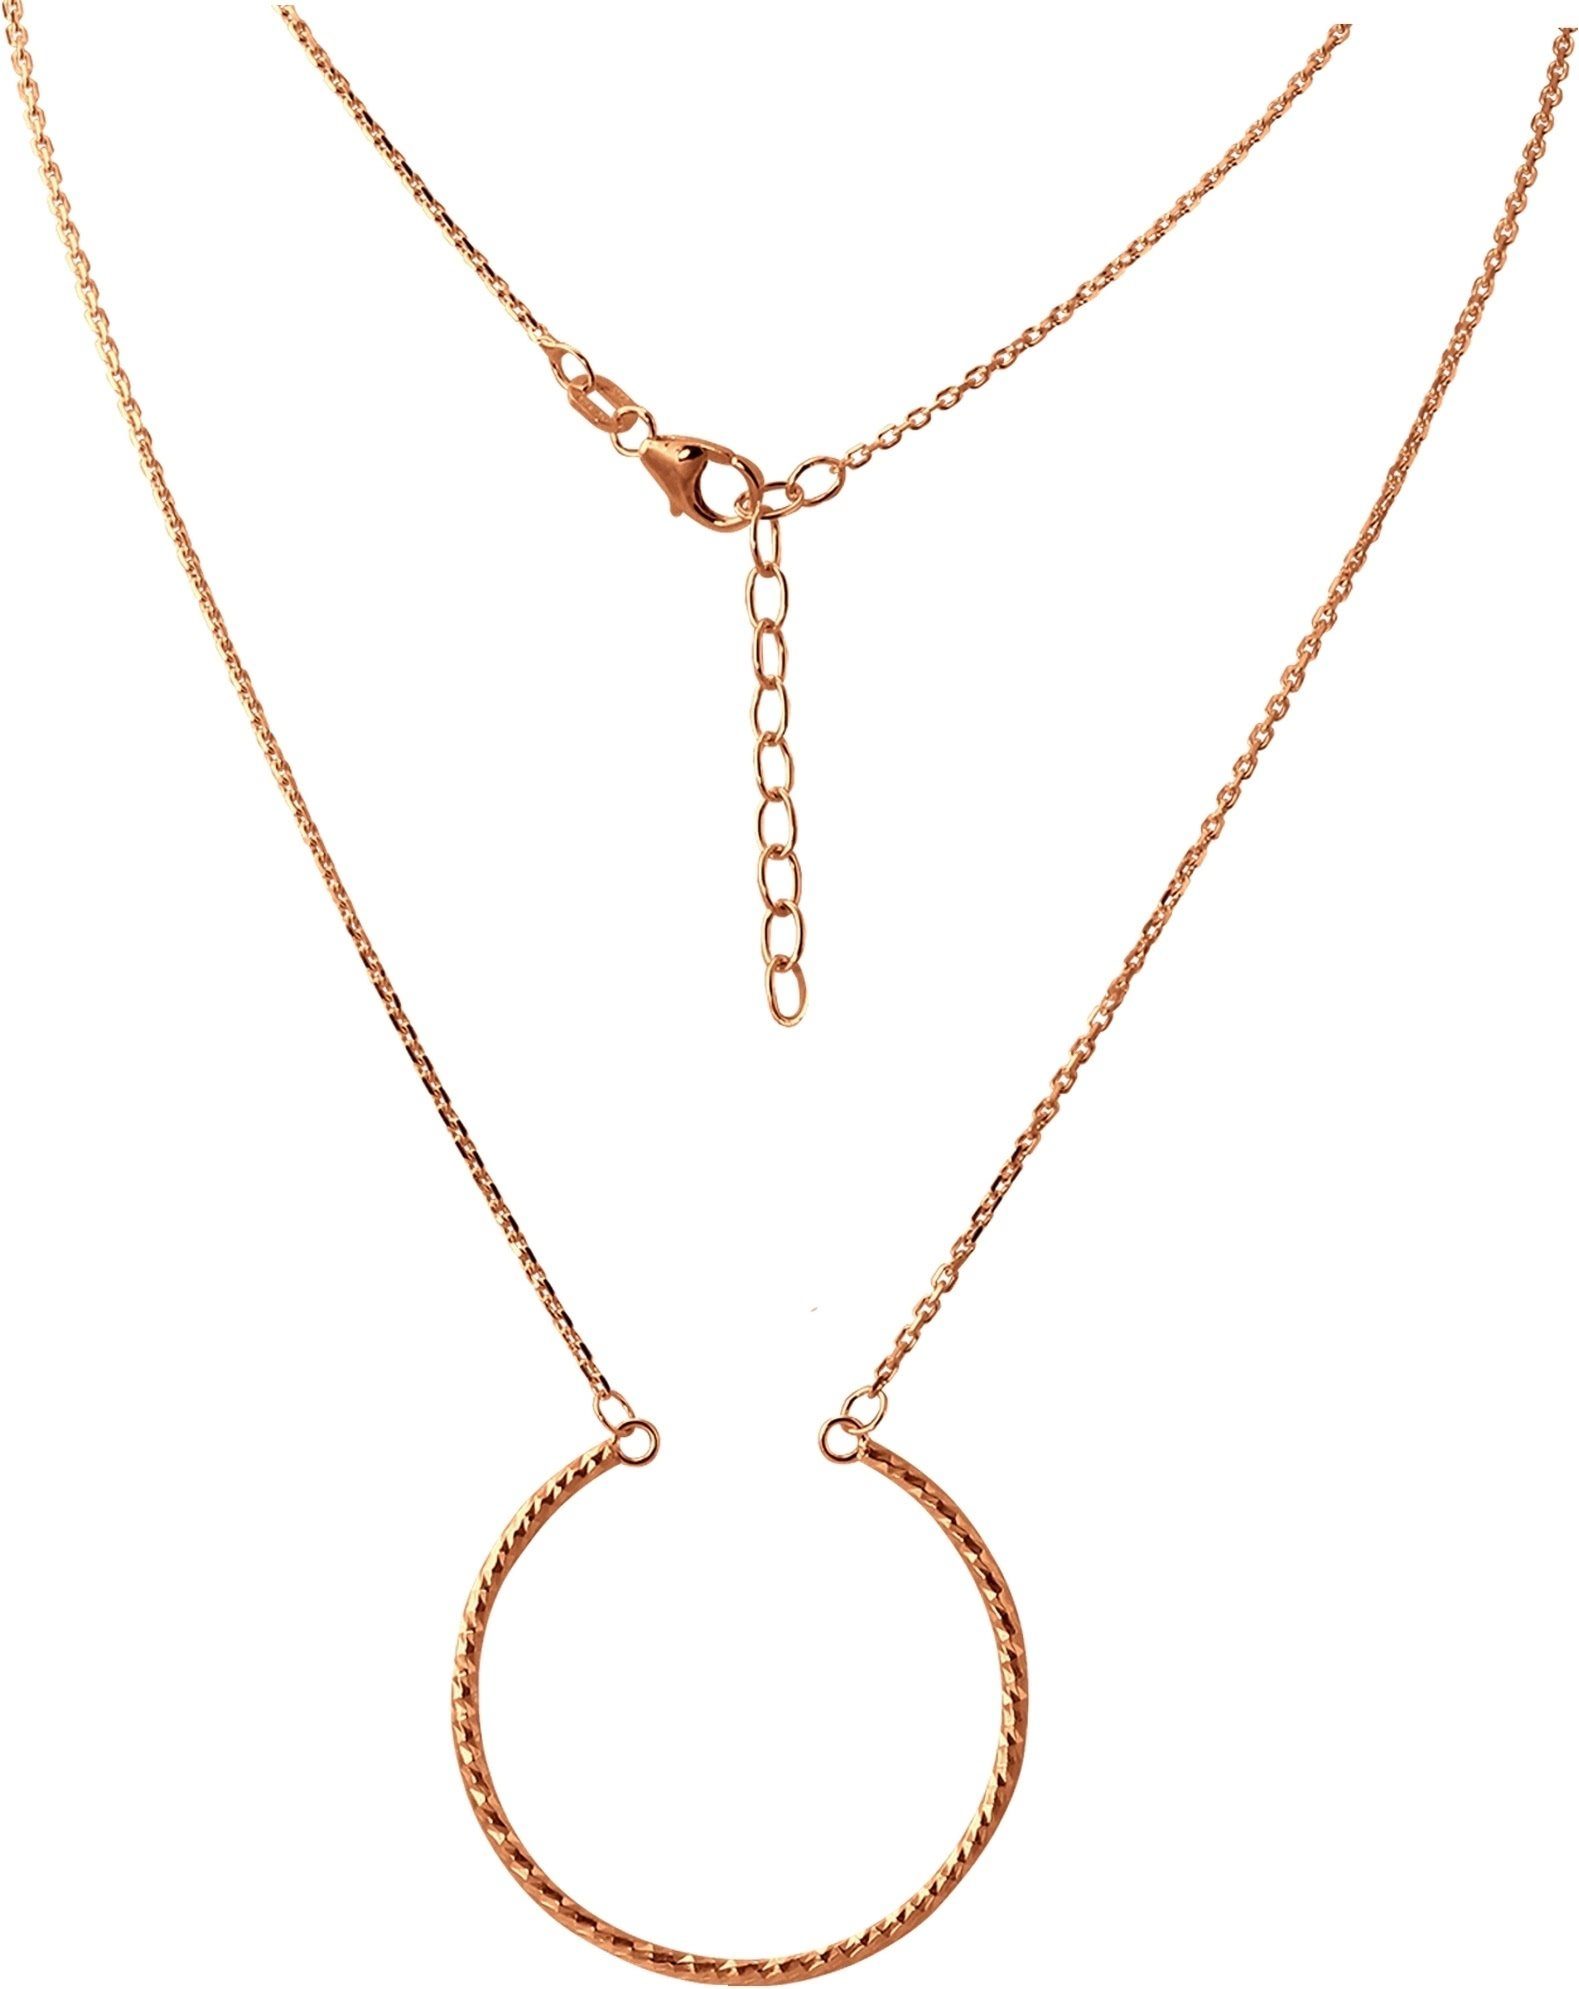 SilberDream Silberkette SilberDream Anhänger Halskette rose, Halsketten (Anhänger) ca. 41,5cm mit 4,5cm Verlängerung, 925 Sterling